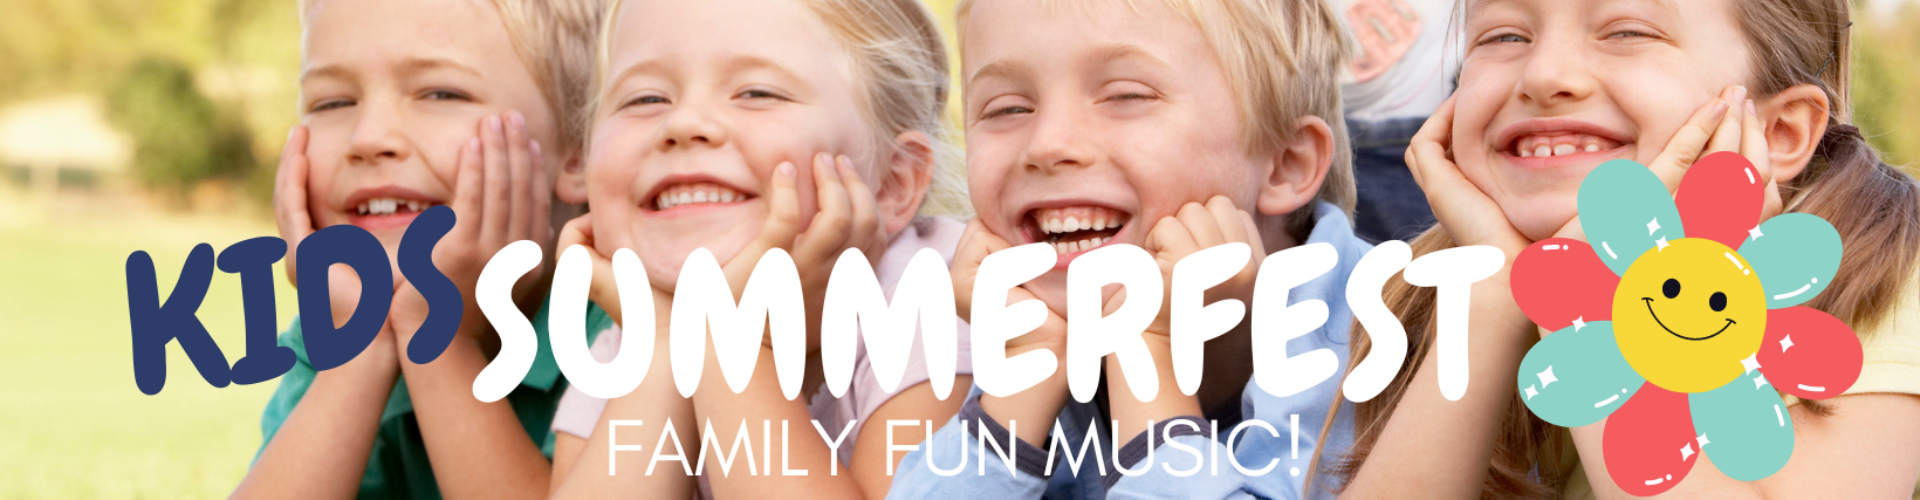 Kids Summerfest advertisement. Family, fun, and music.